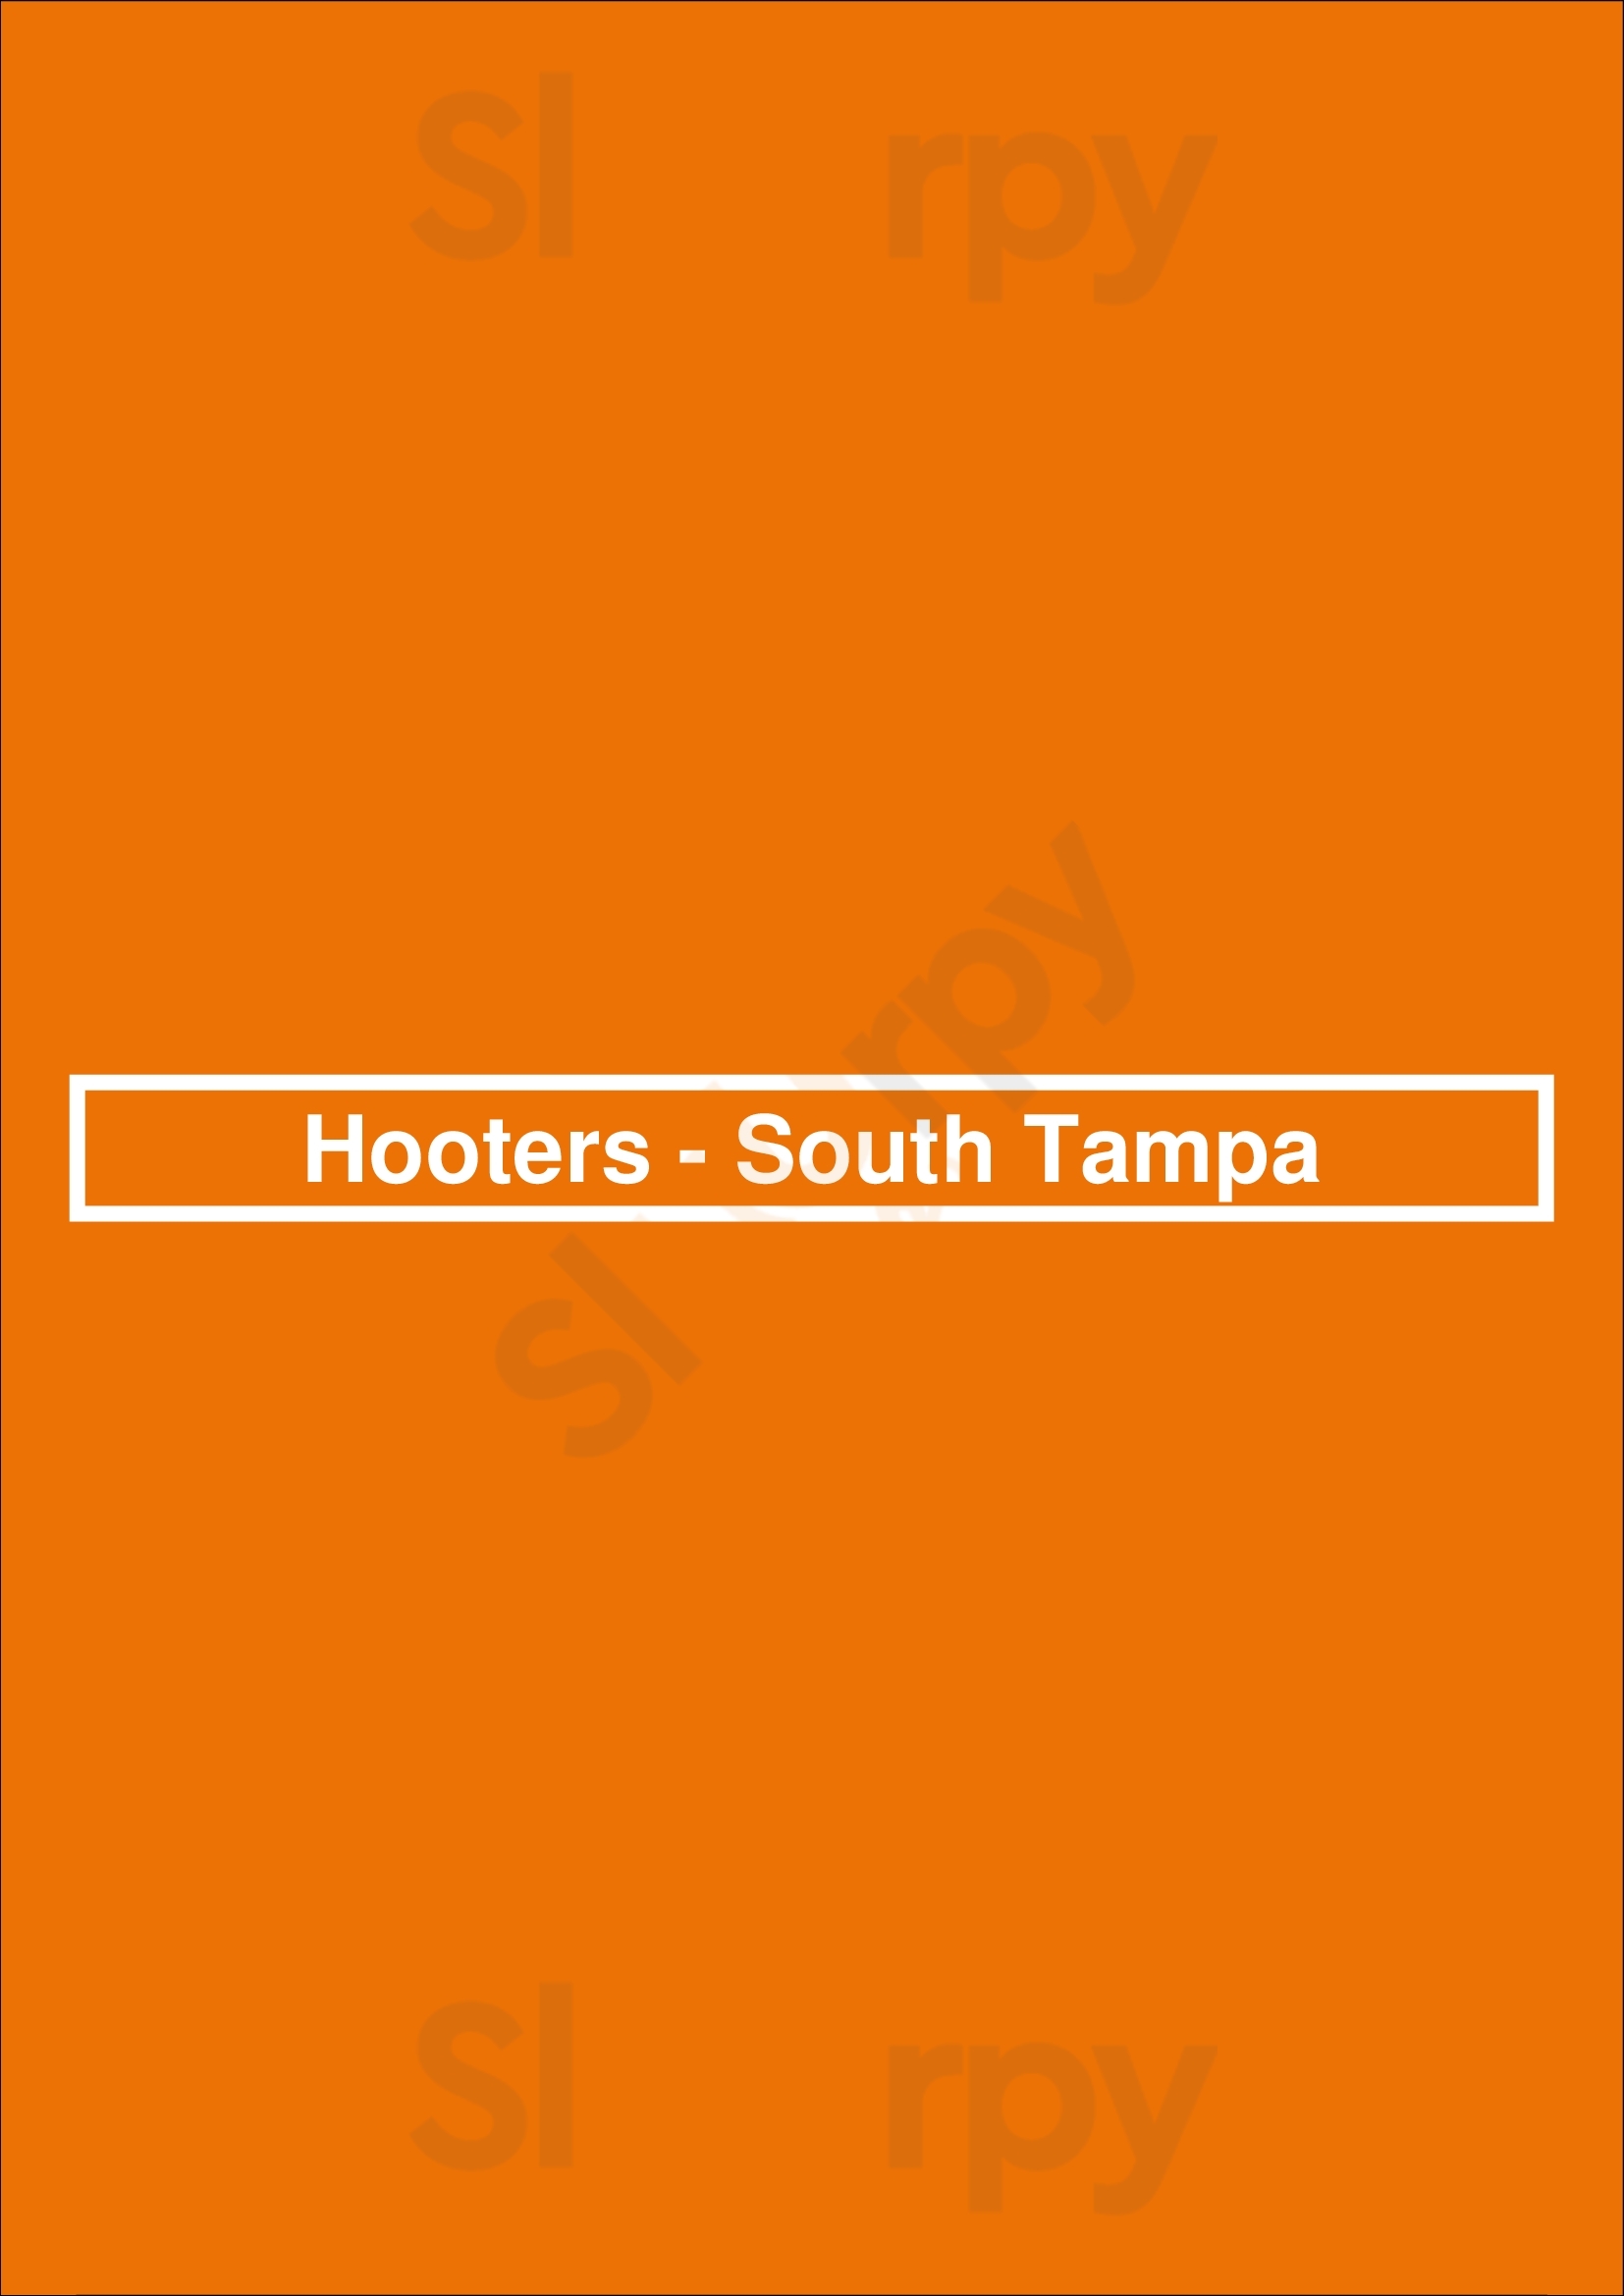 Hooters - South Tampa Tampa Menu - 1